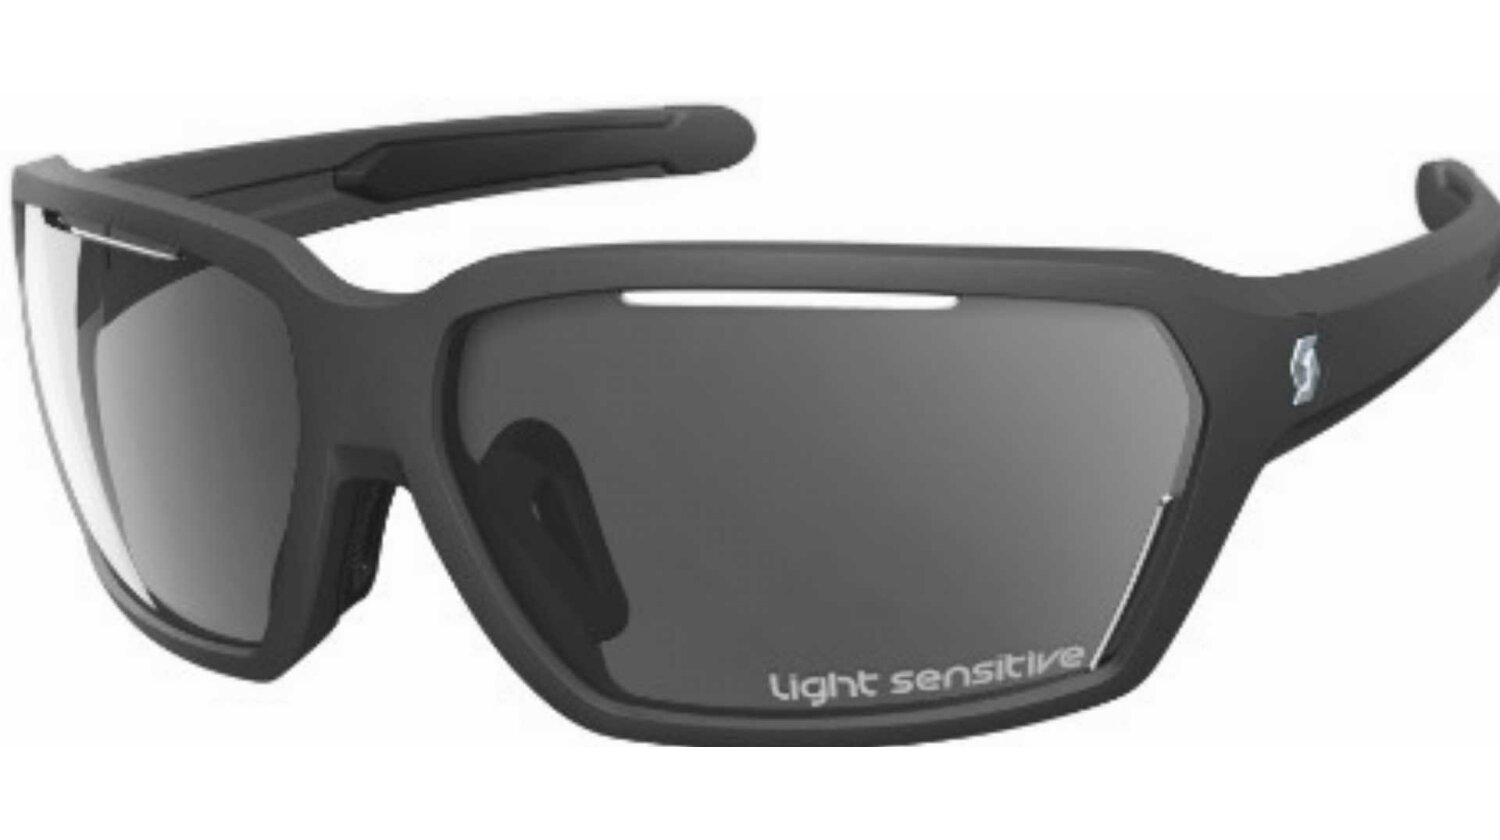 Scott Vector LS Sonnenbrille black matt/grey light sensitive